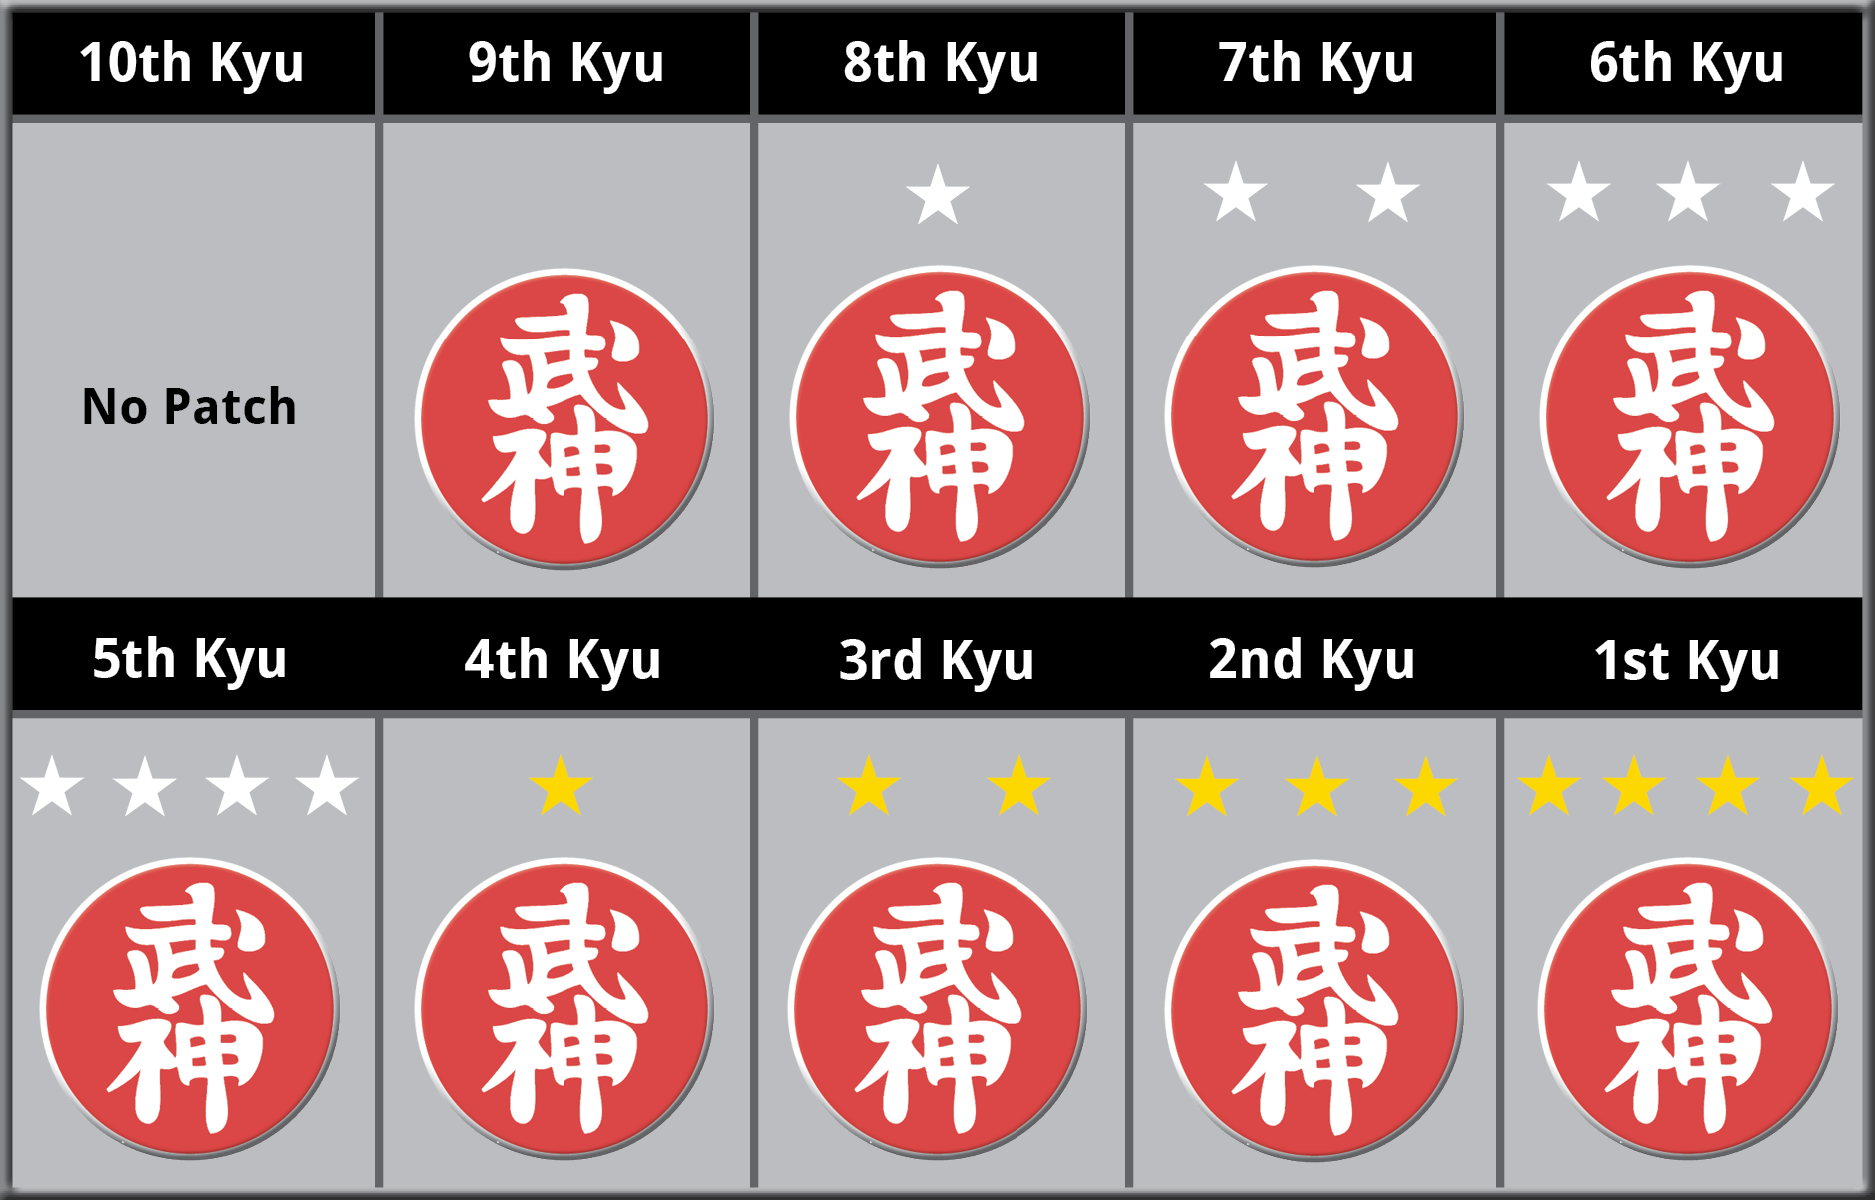 Kyu Ranking